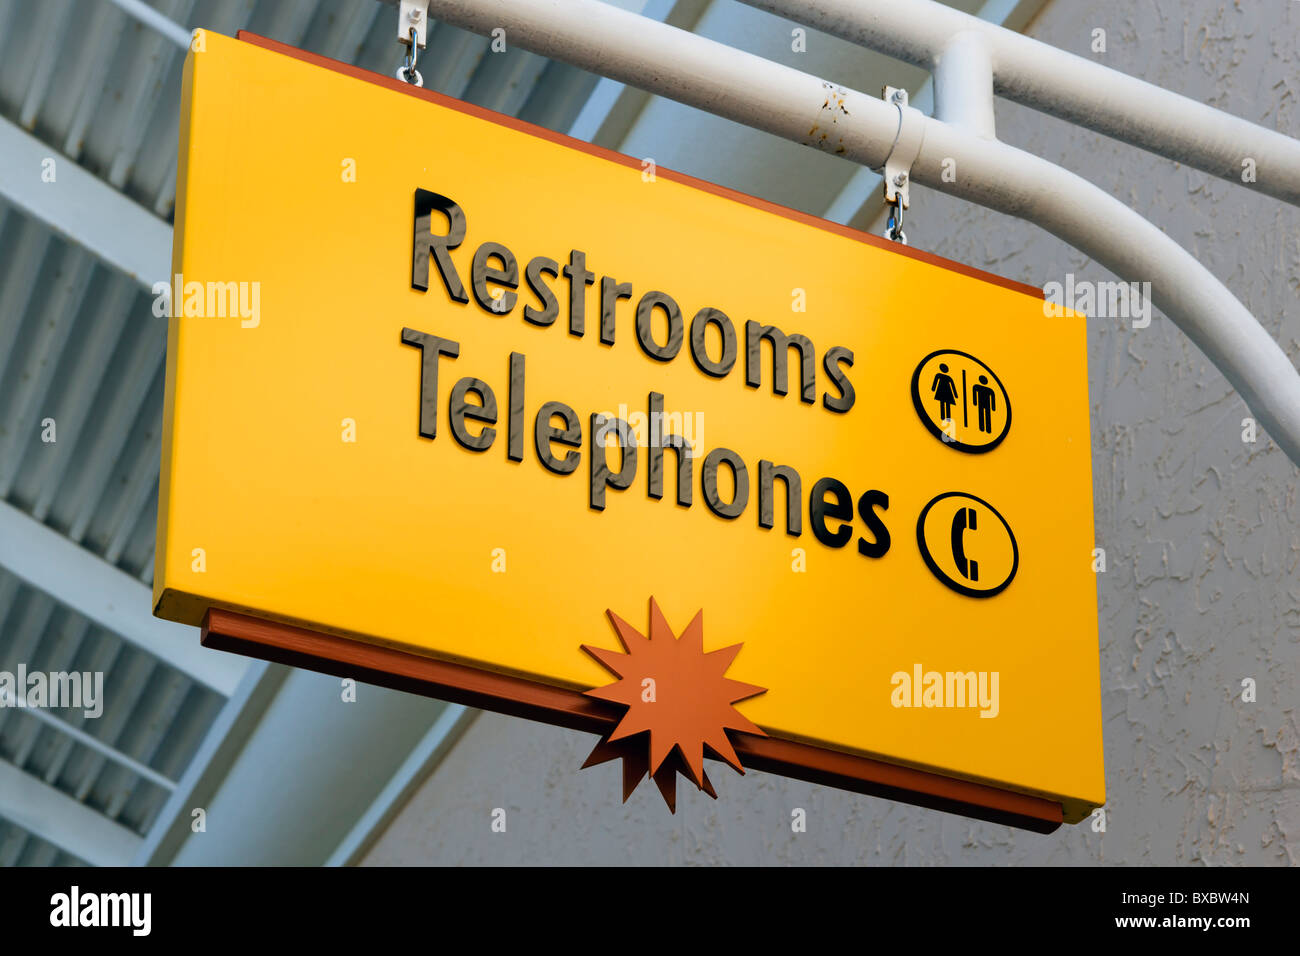 Telefone und Toiletten Schilder, Orlando Premium Outlets, Lake Buena Vista, Orlando, Florida, USA Stockfoto